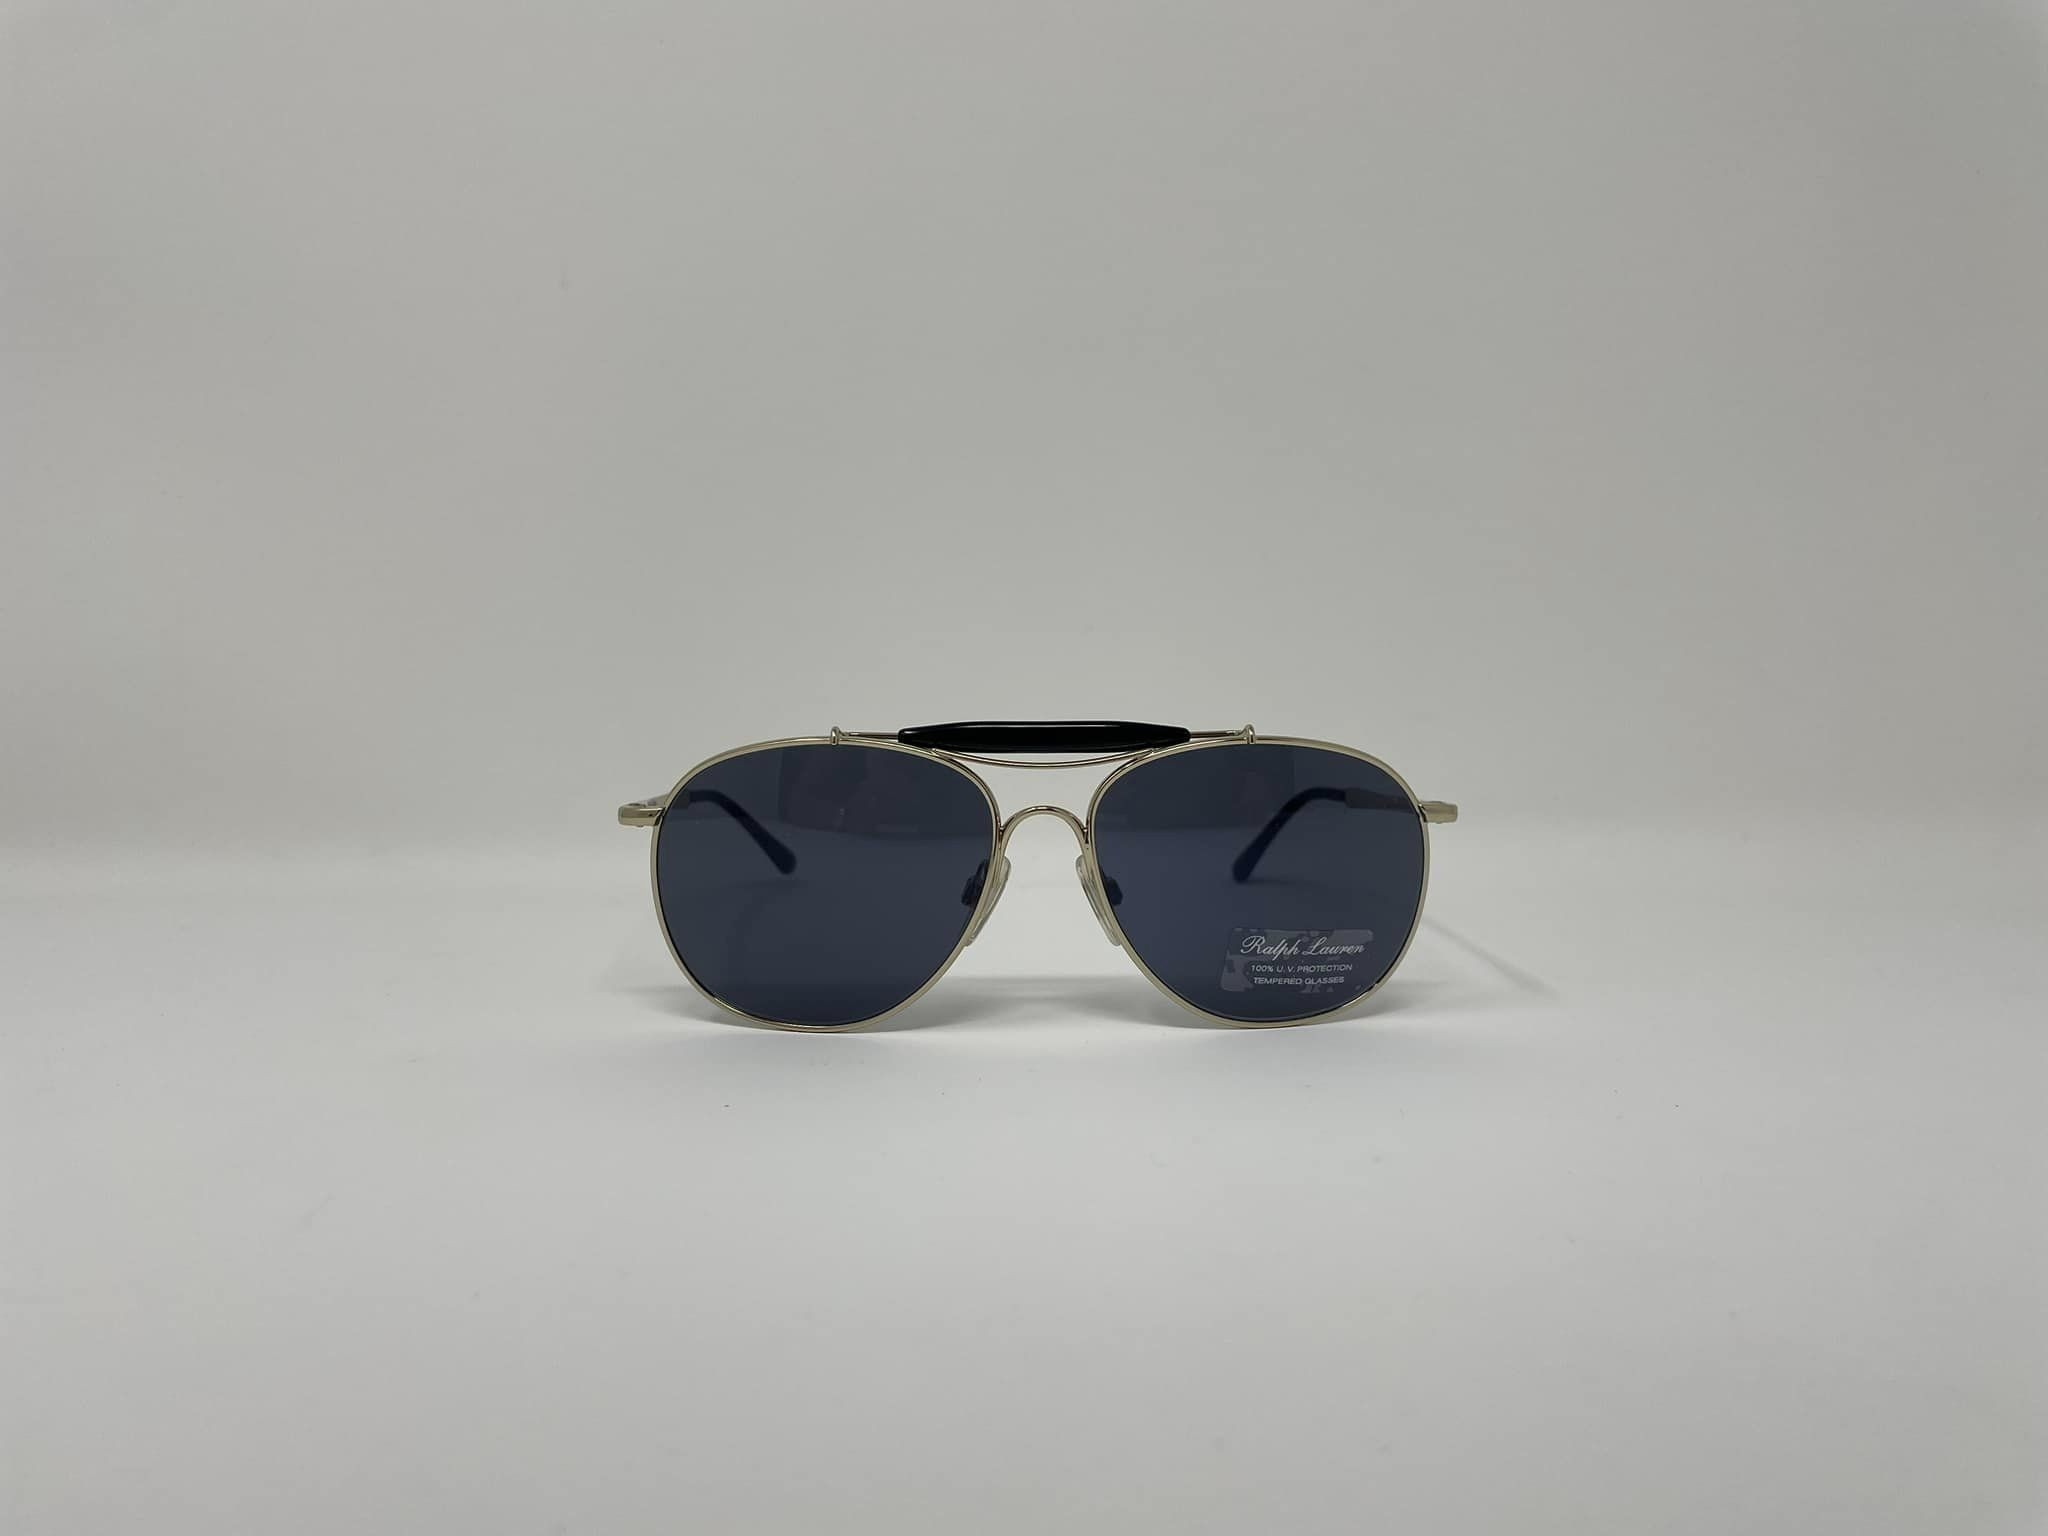 Ralph Lauren PH 3078 P men's sunglasses